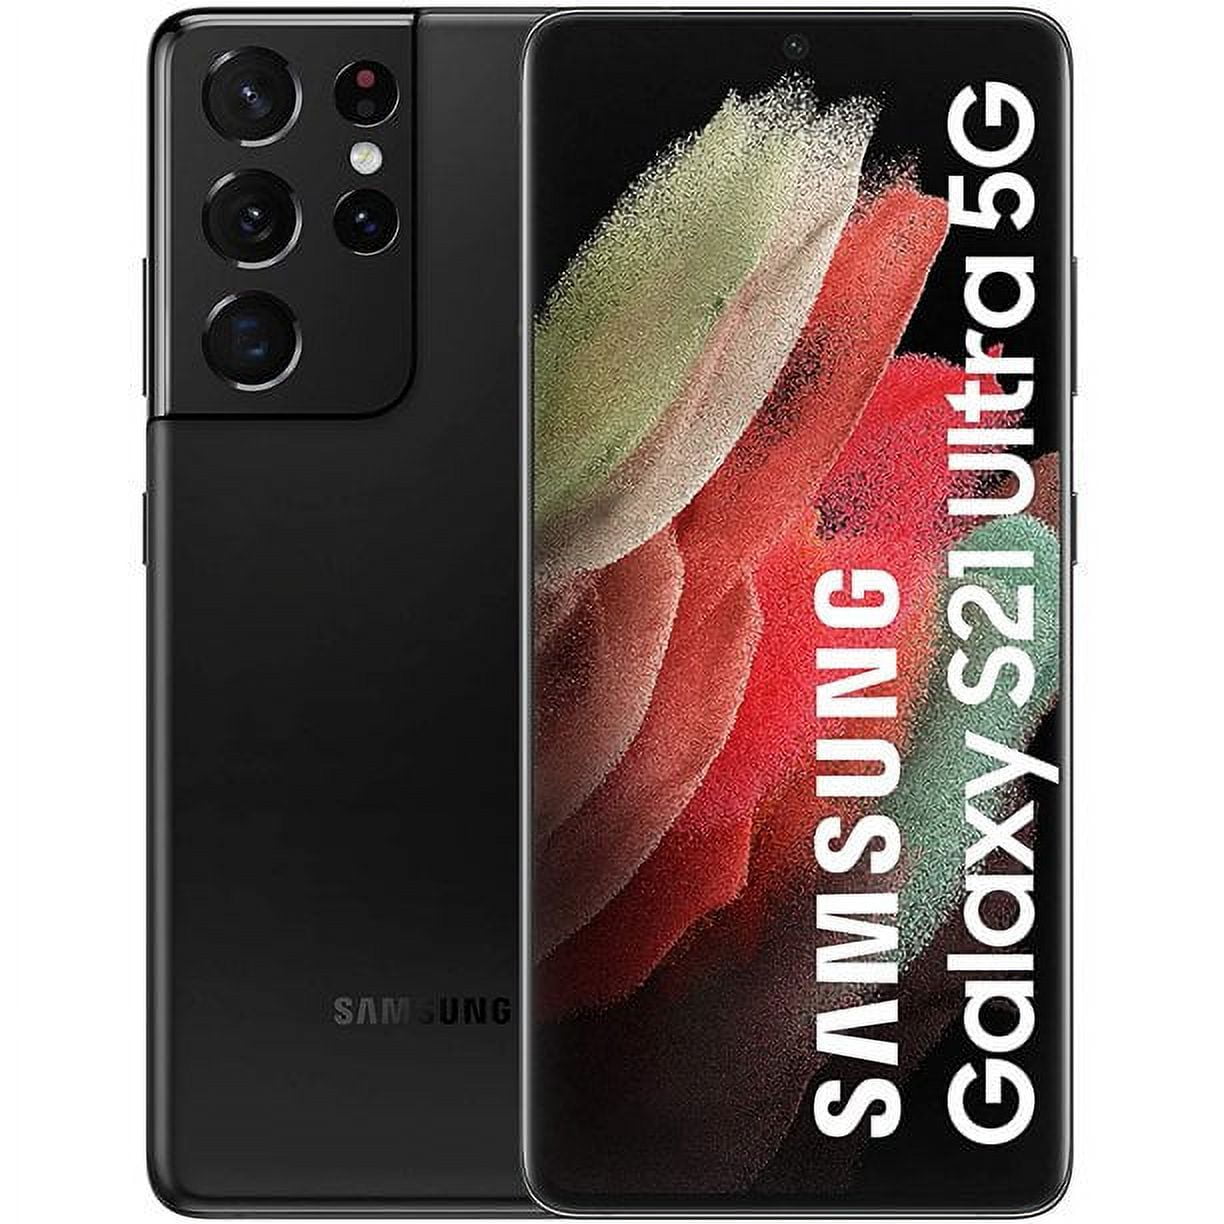 Samsung Galaxy S21 Ultra 5G 128GB G998U Unlocked - Used